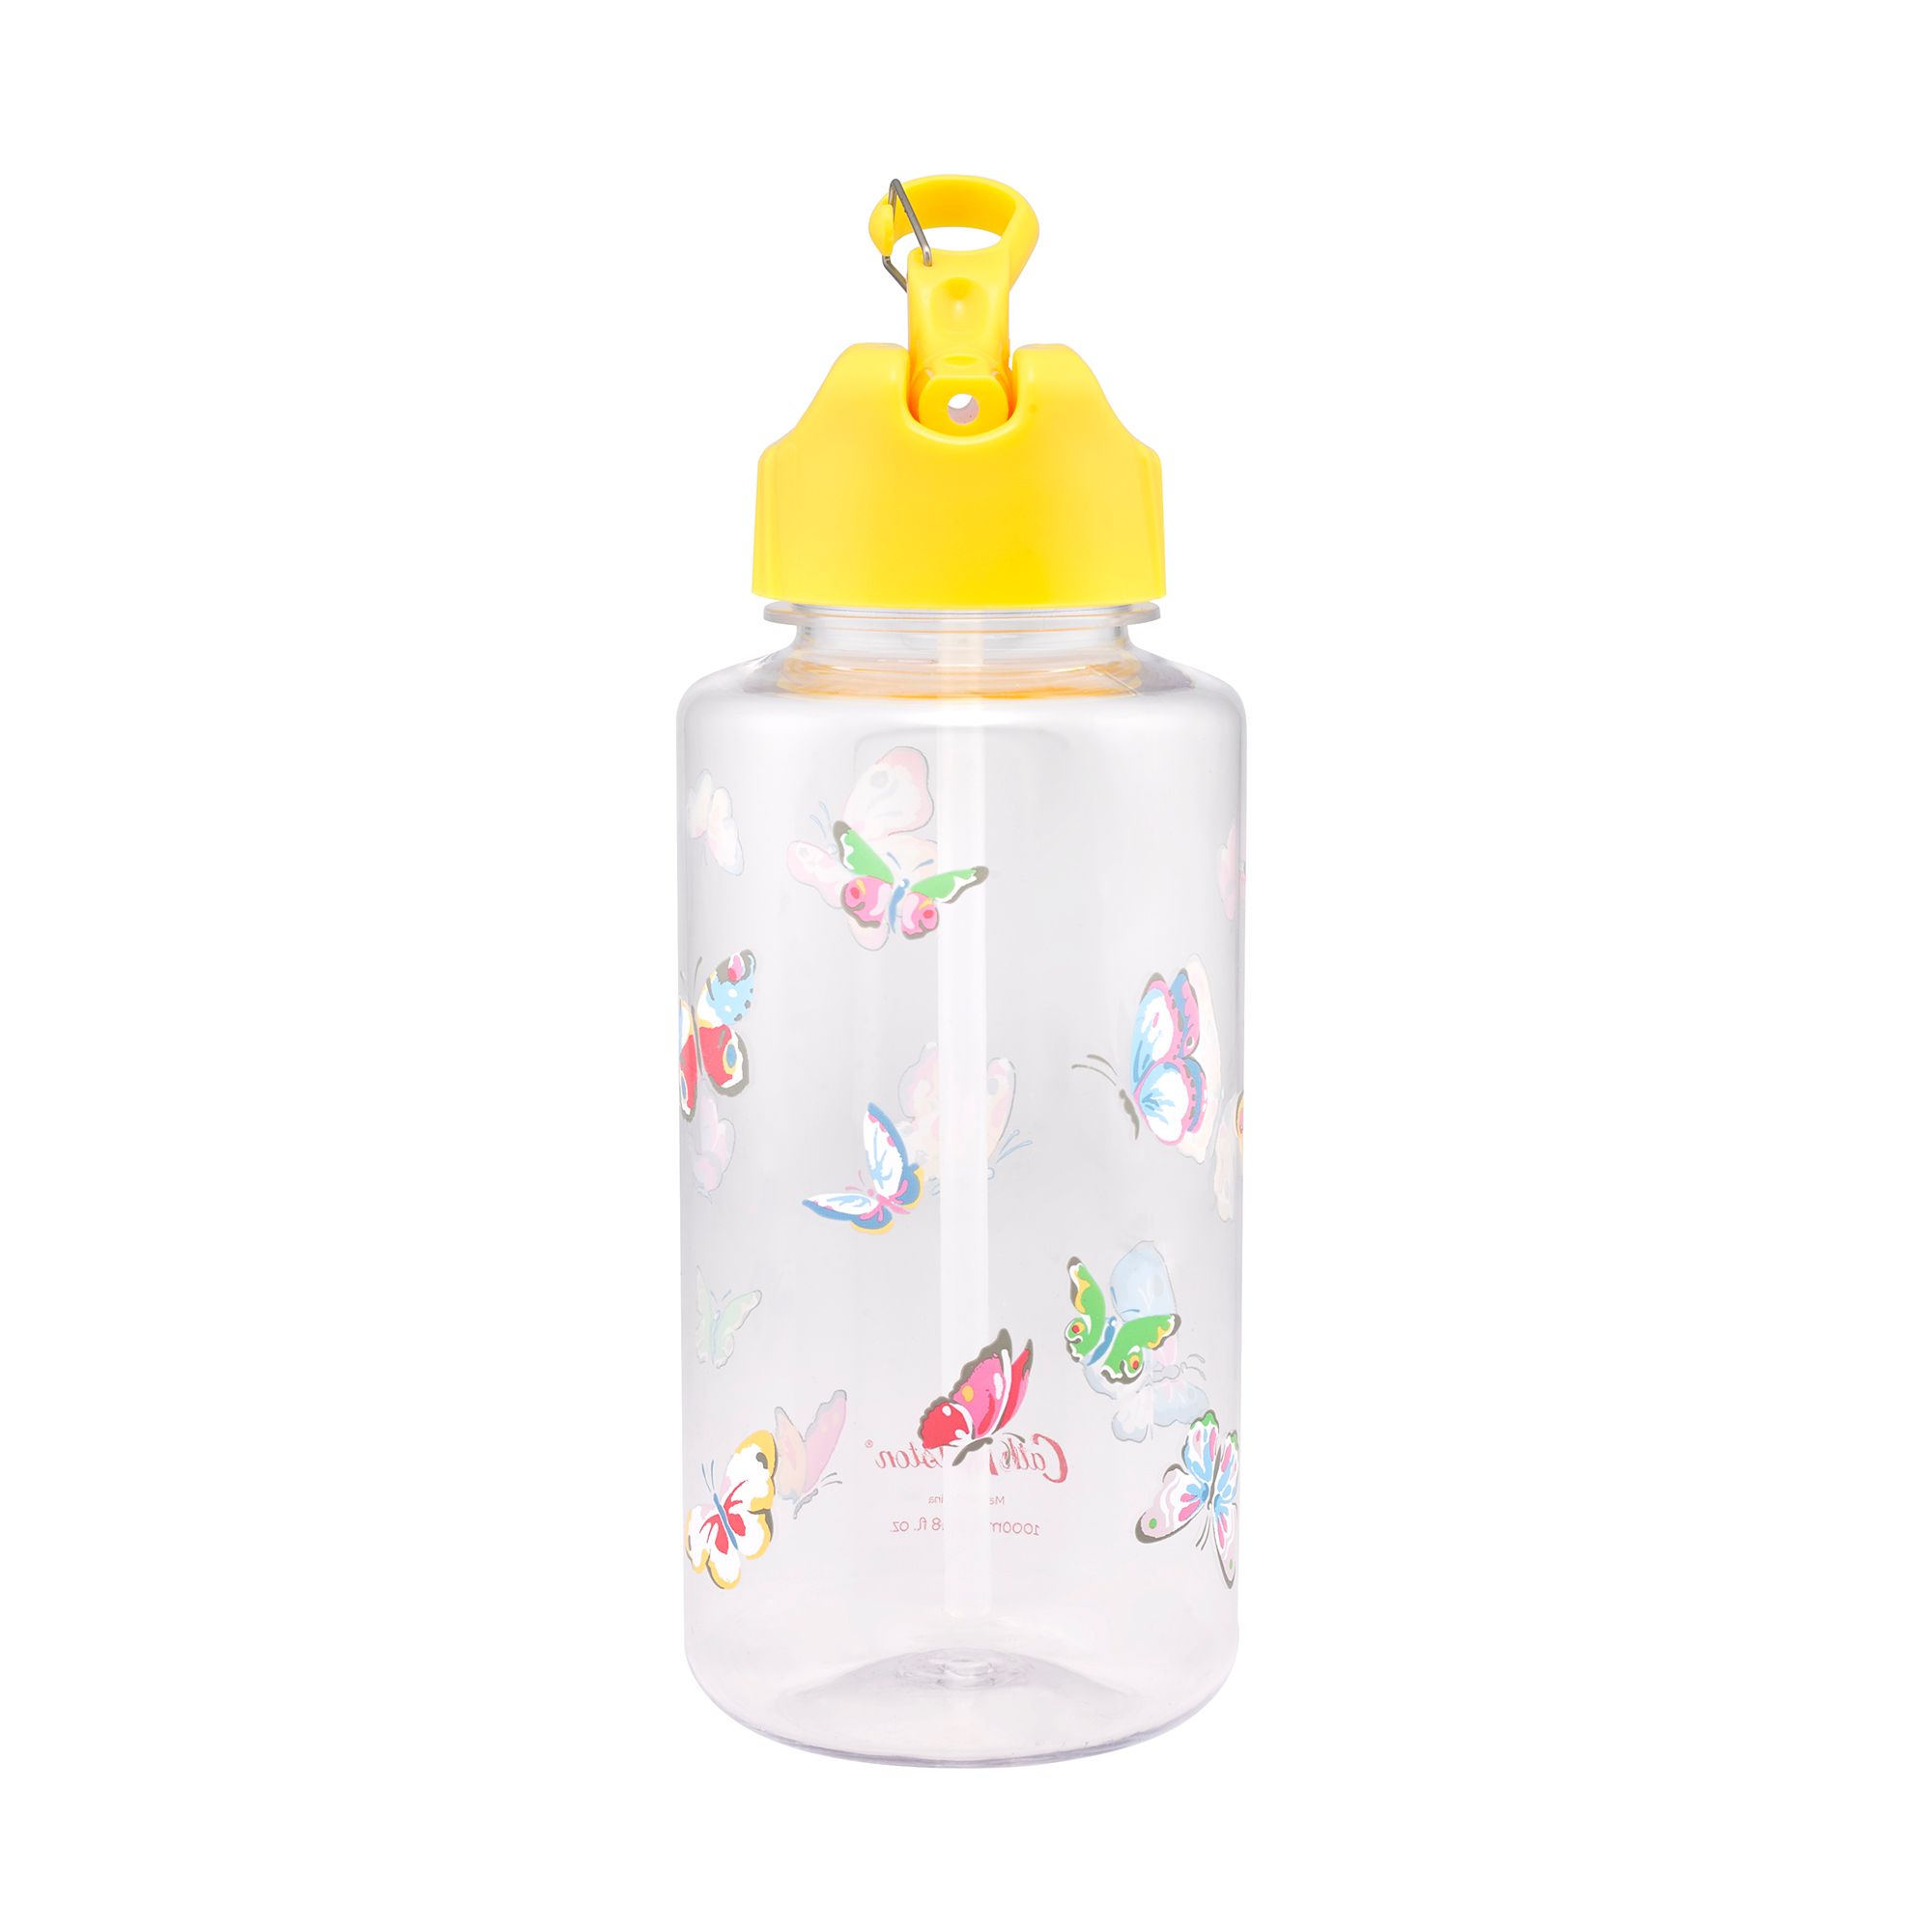  Bình Nước 1L/1L Water Bottle - Butterflies - Cream-1011883 